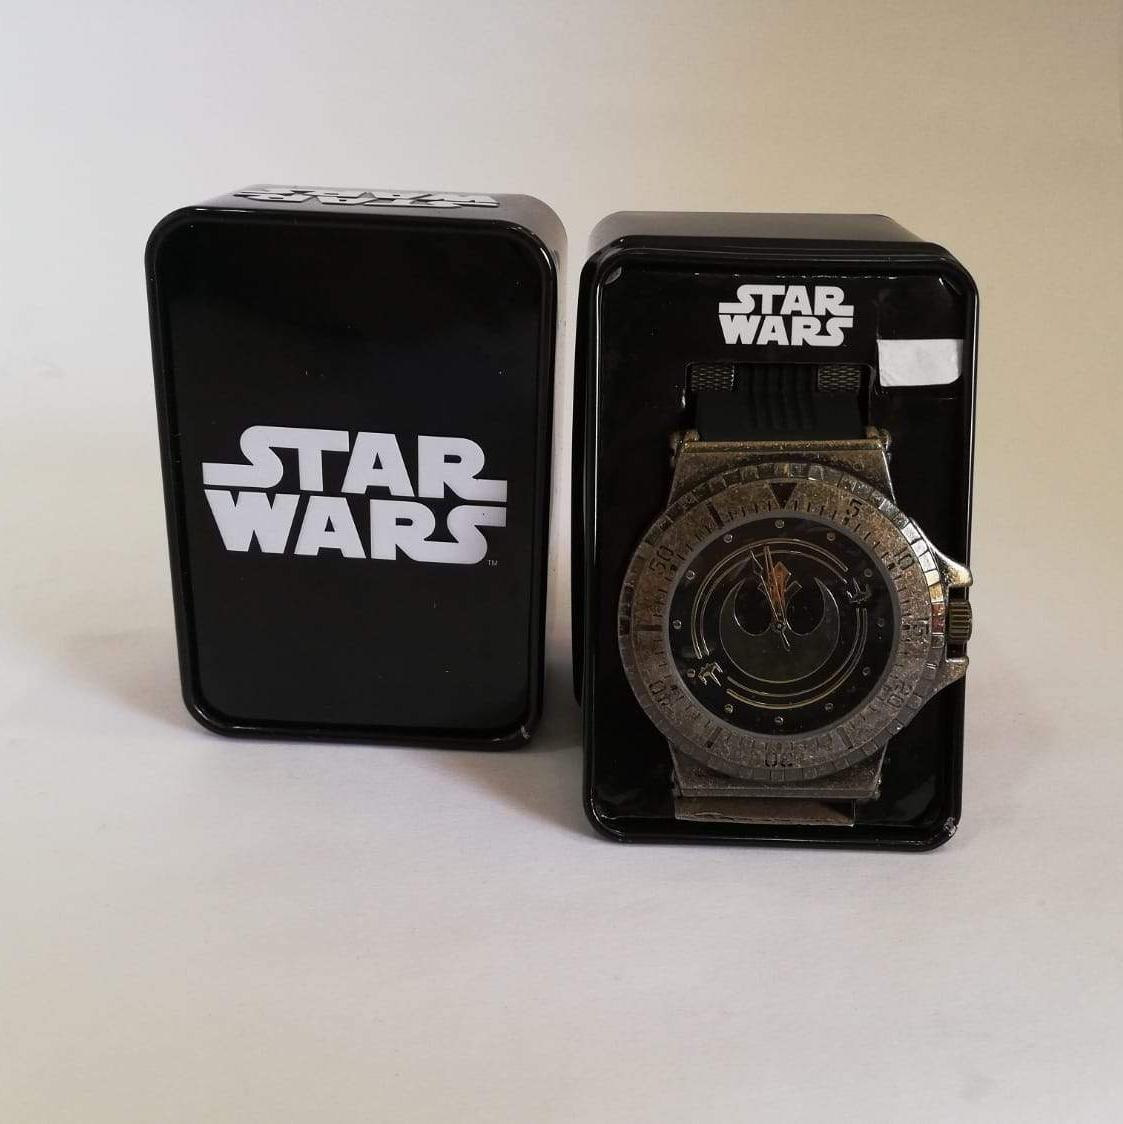 Reloj Star Wars - The Gift Shop Costa Rica